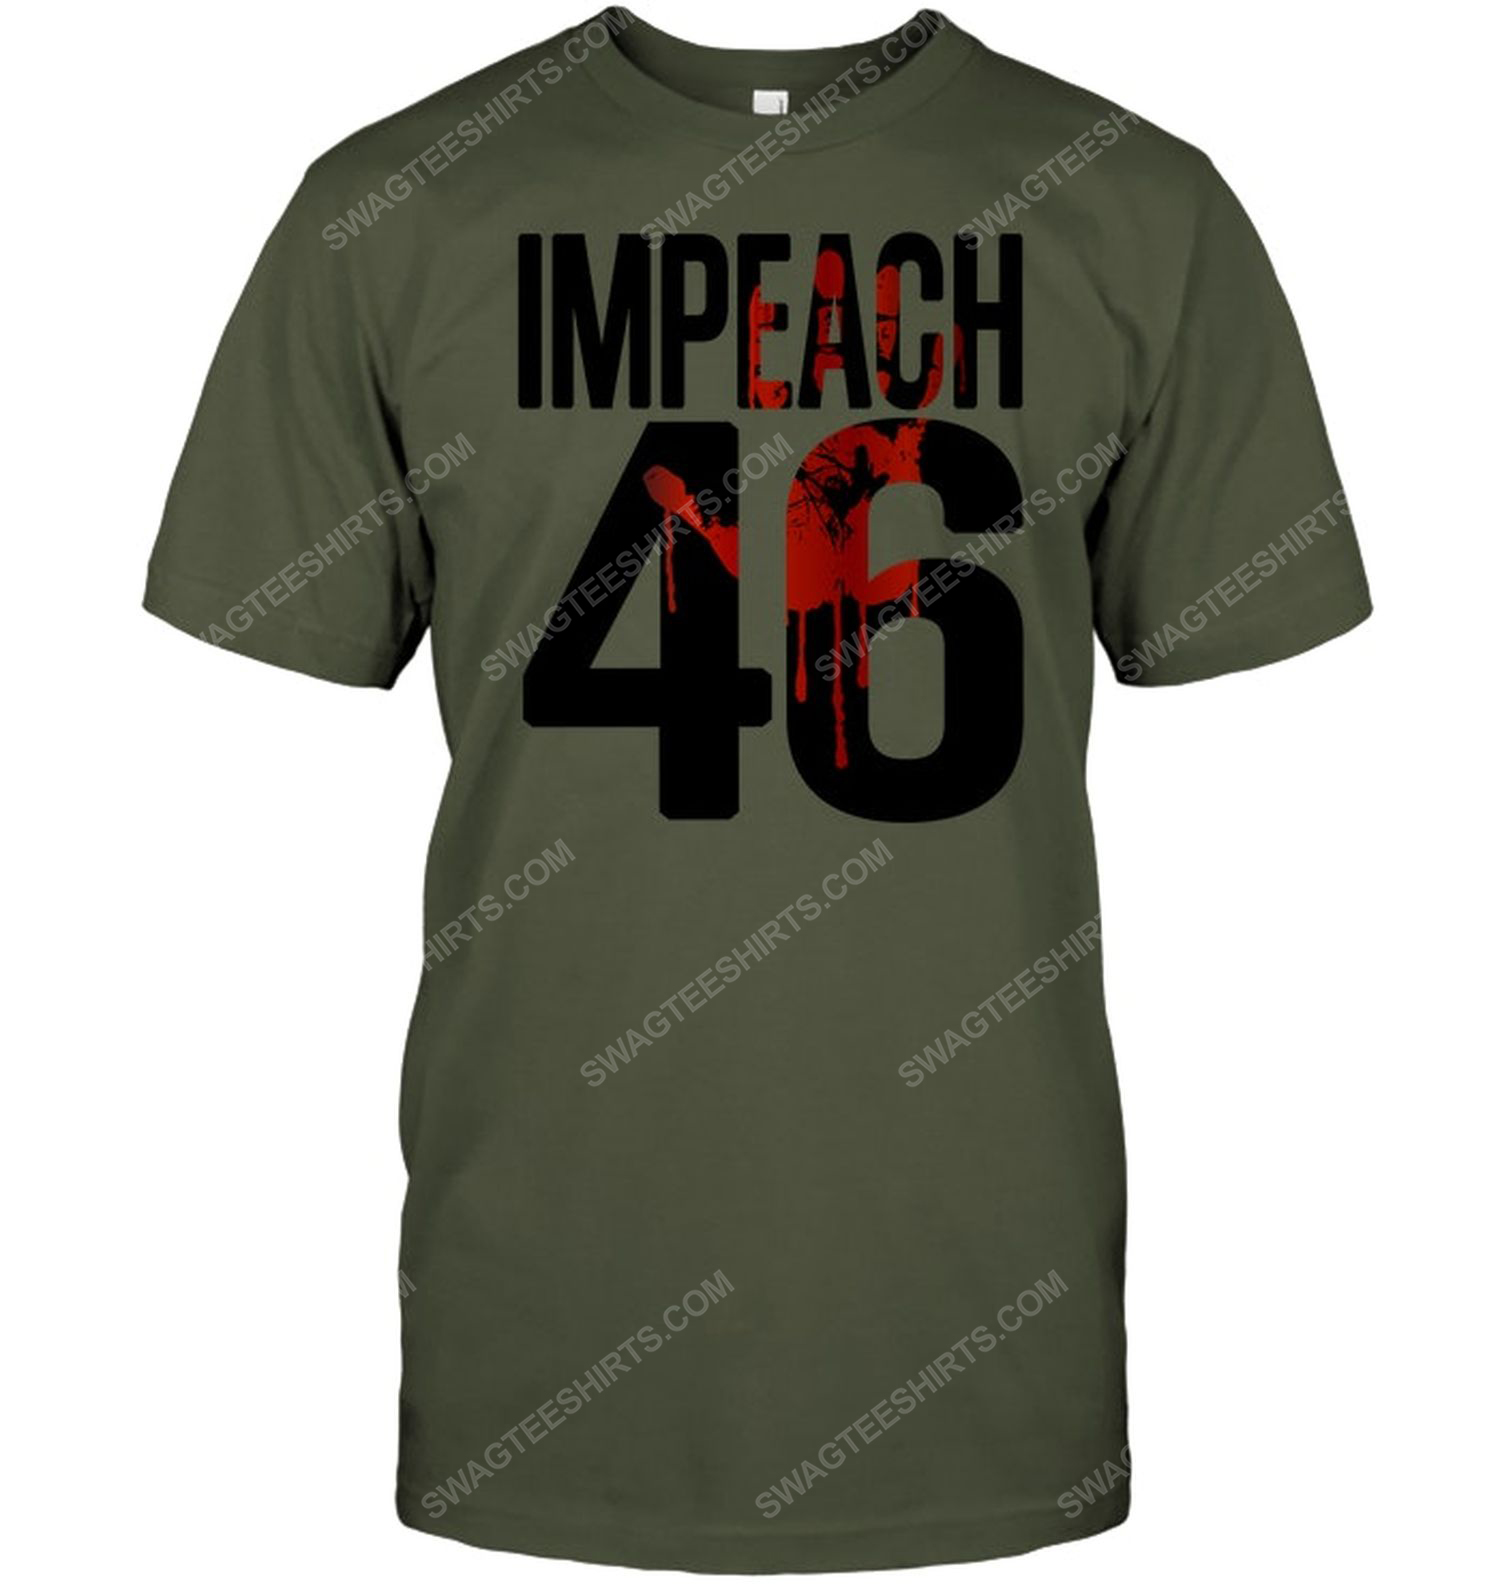 Impeach 46 blood halloween political tshirt